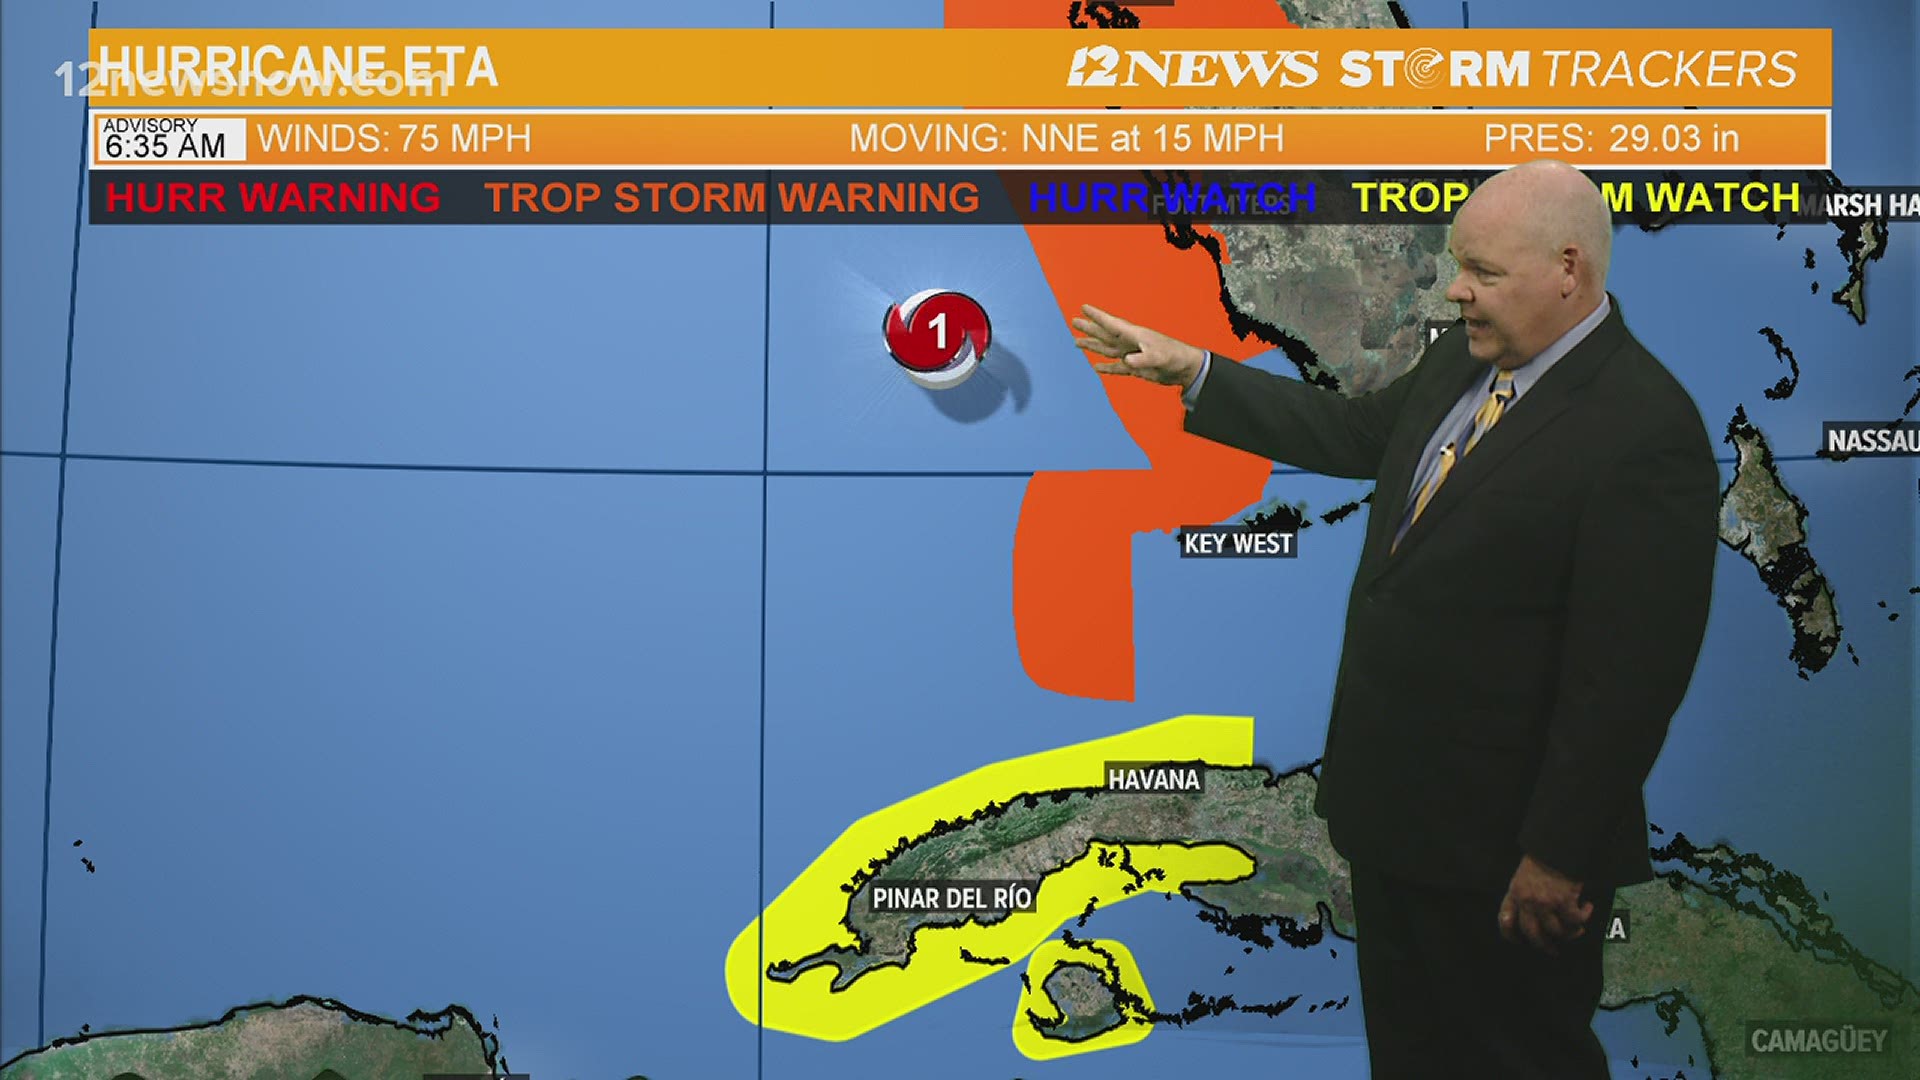 Eta has re-strengthened into a hurricane offshore the southwestern coast of Florida.